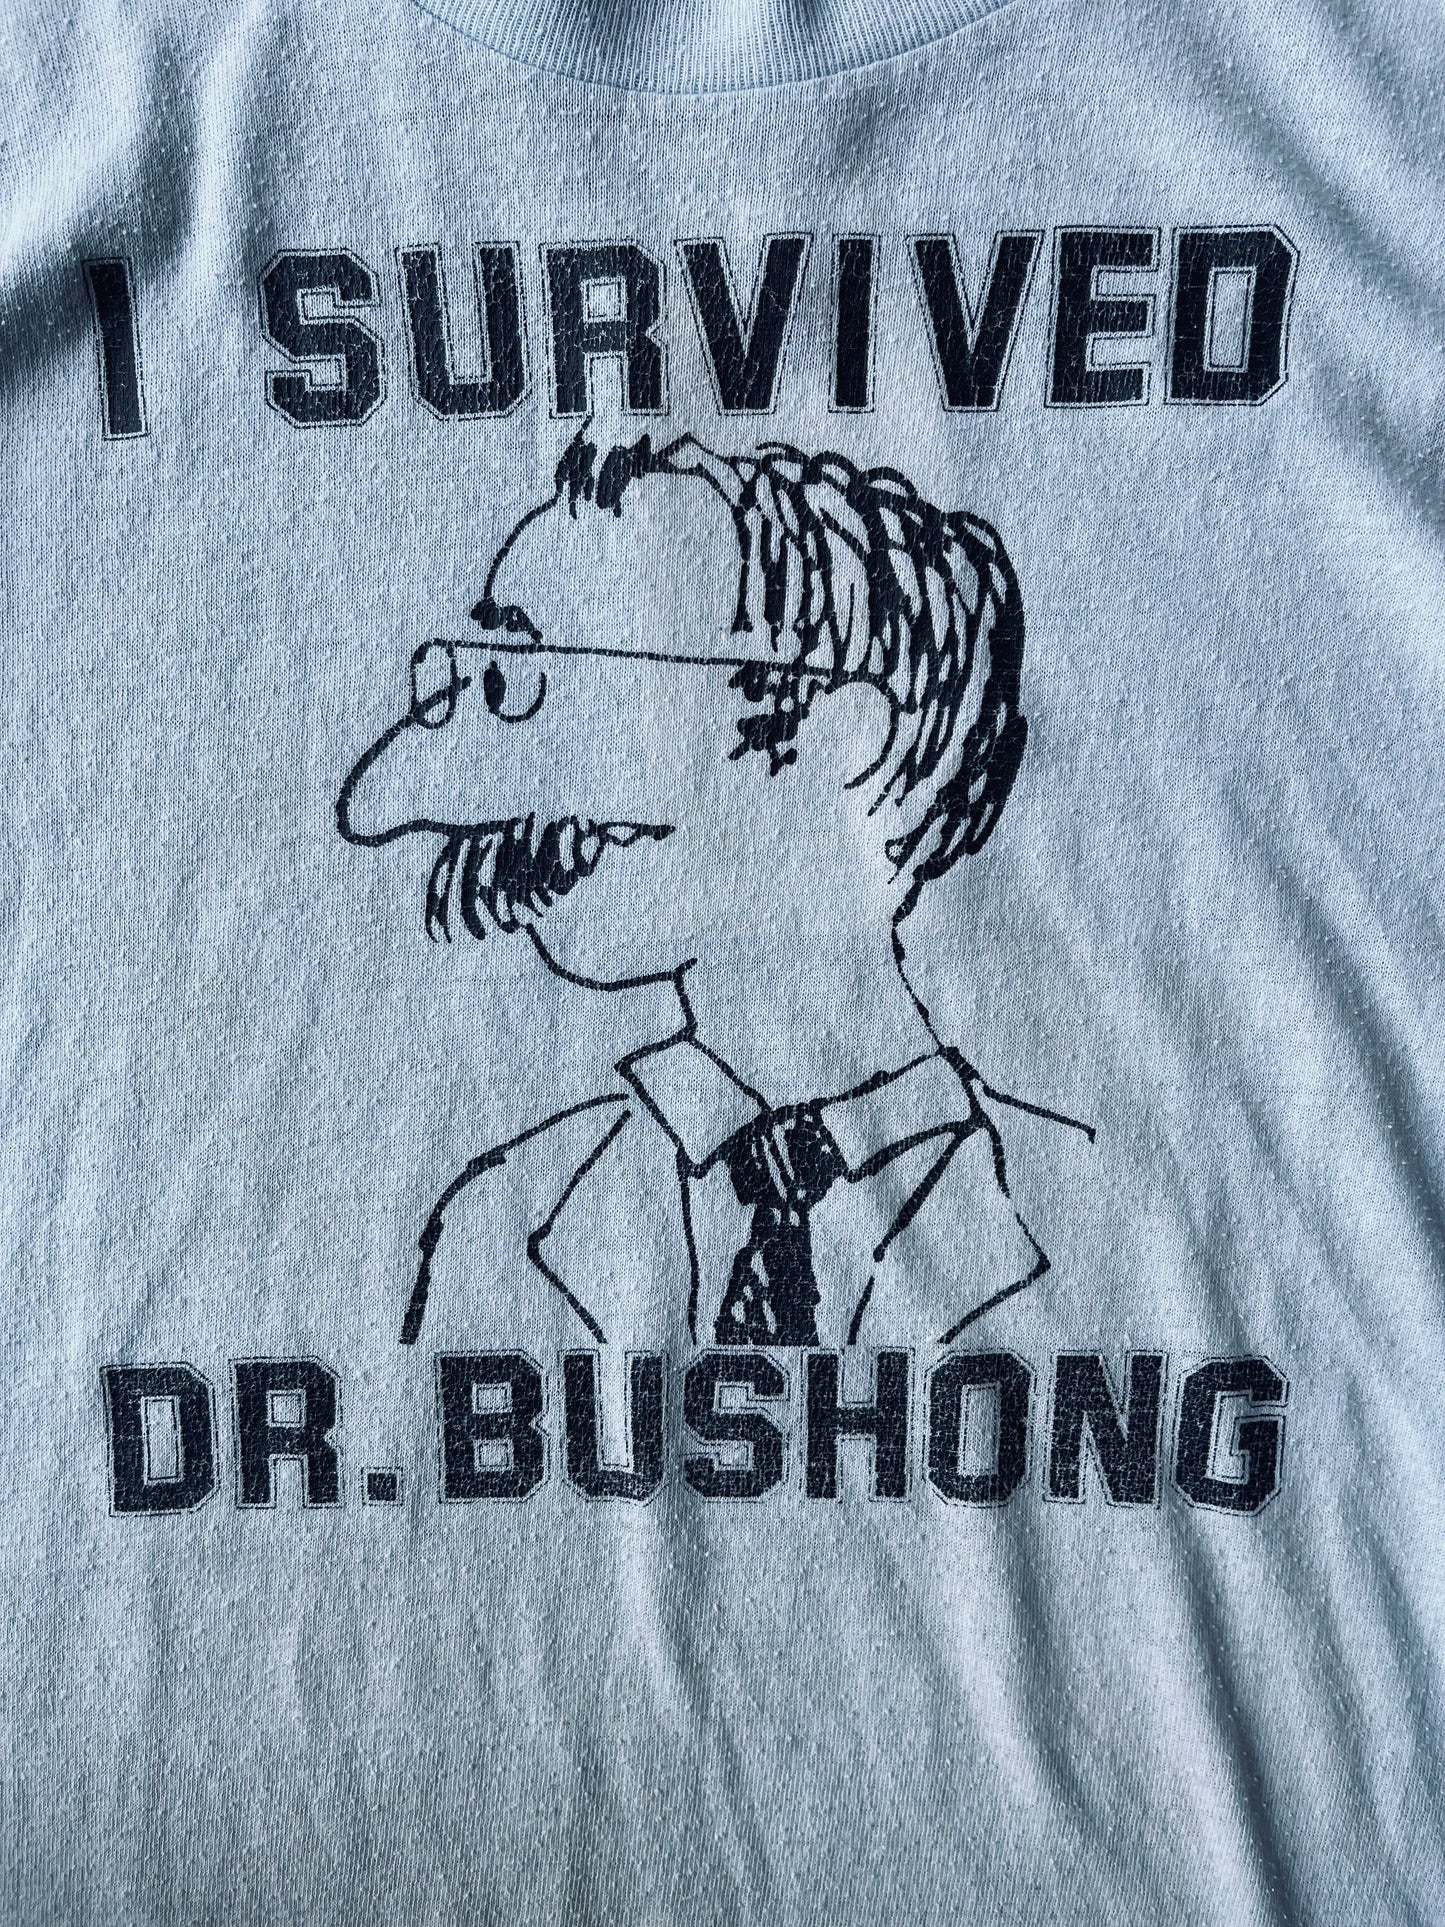 1980’s “I Survived Dr. Bushong” Graphic Tee | Large